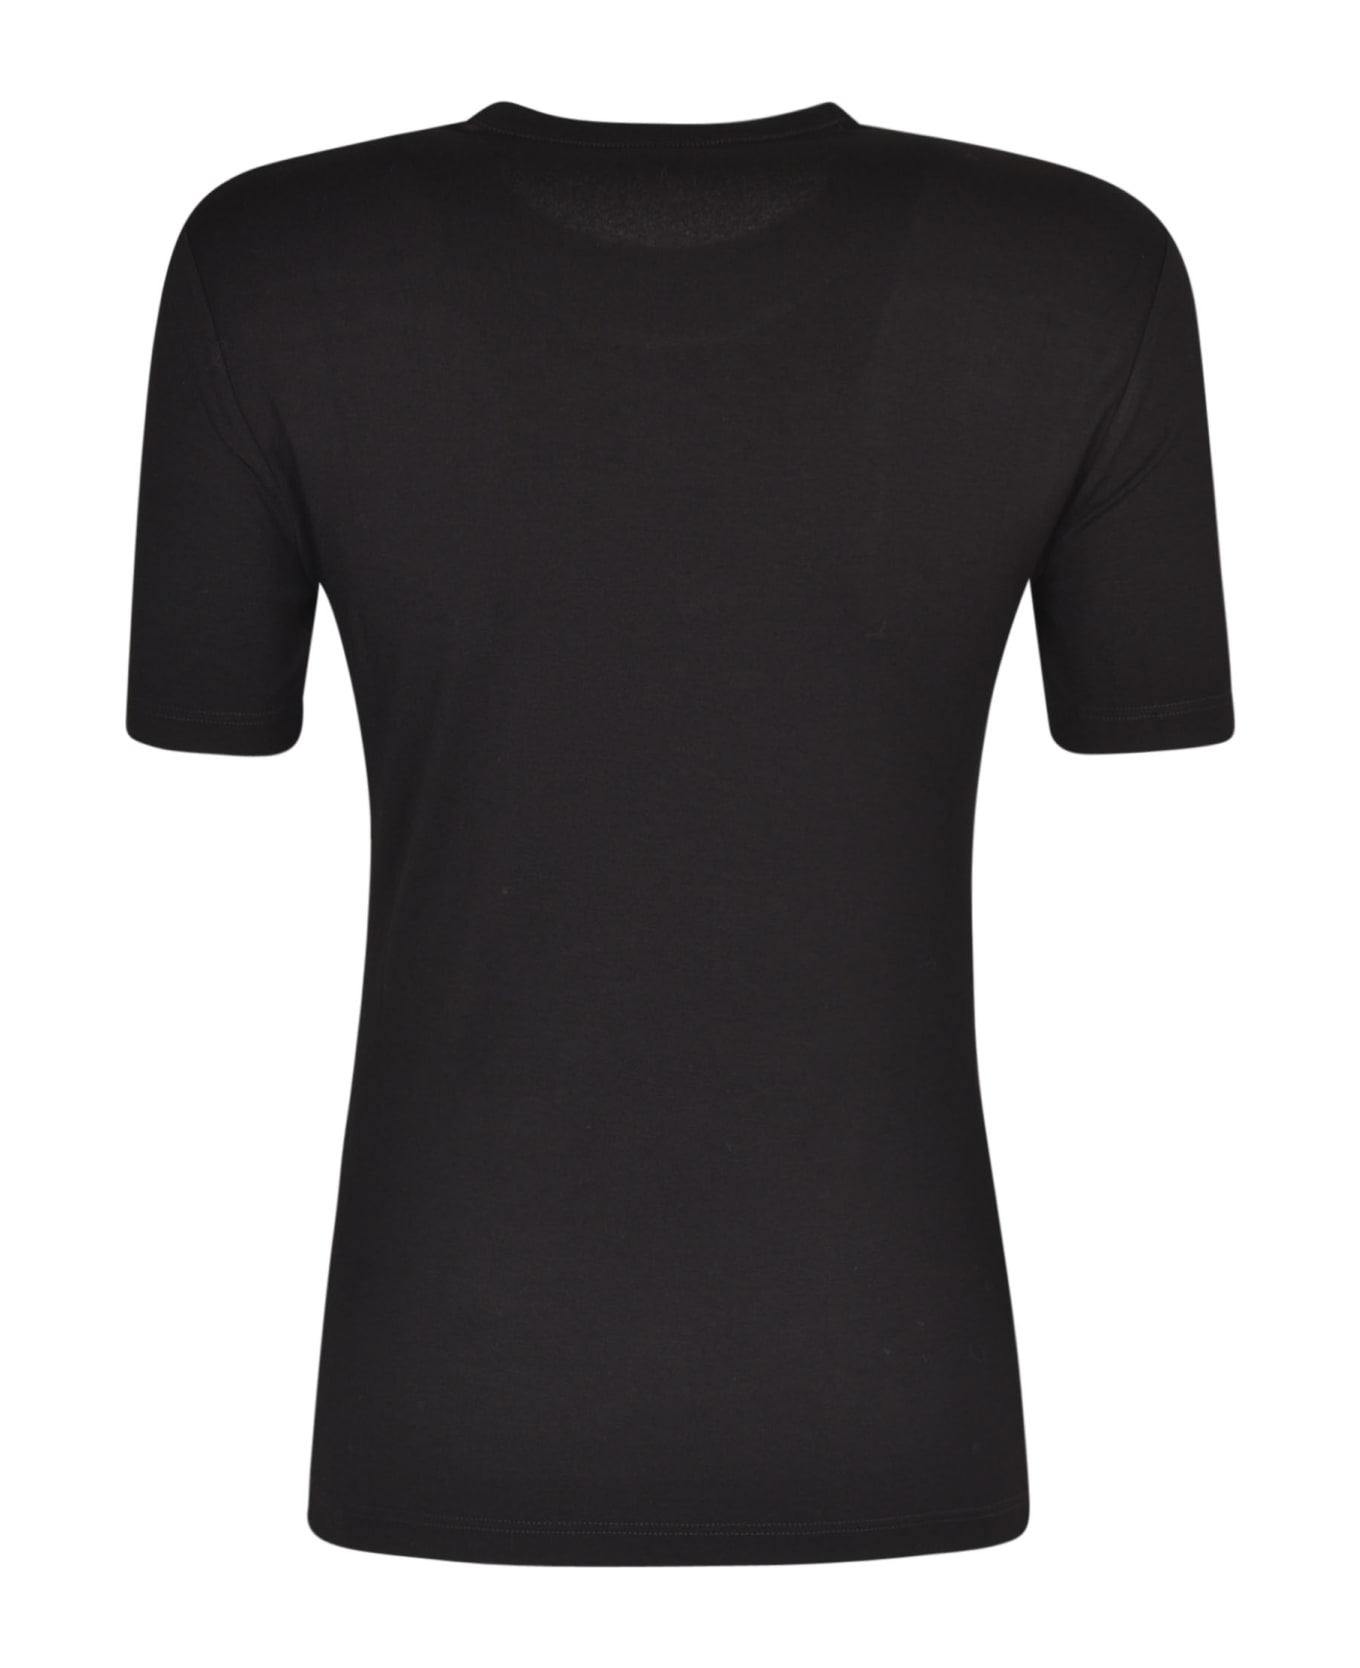 Versace I Love You T-shirt - Black